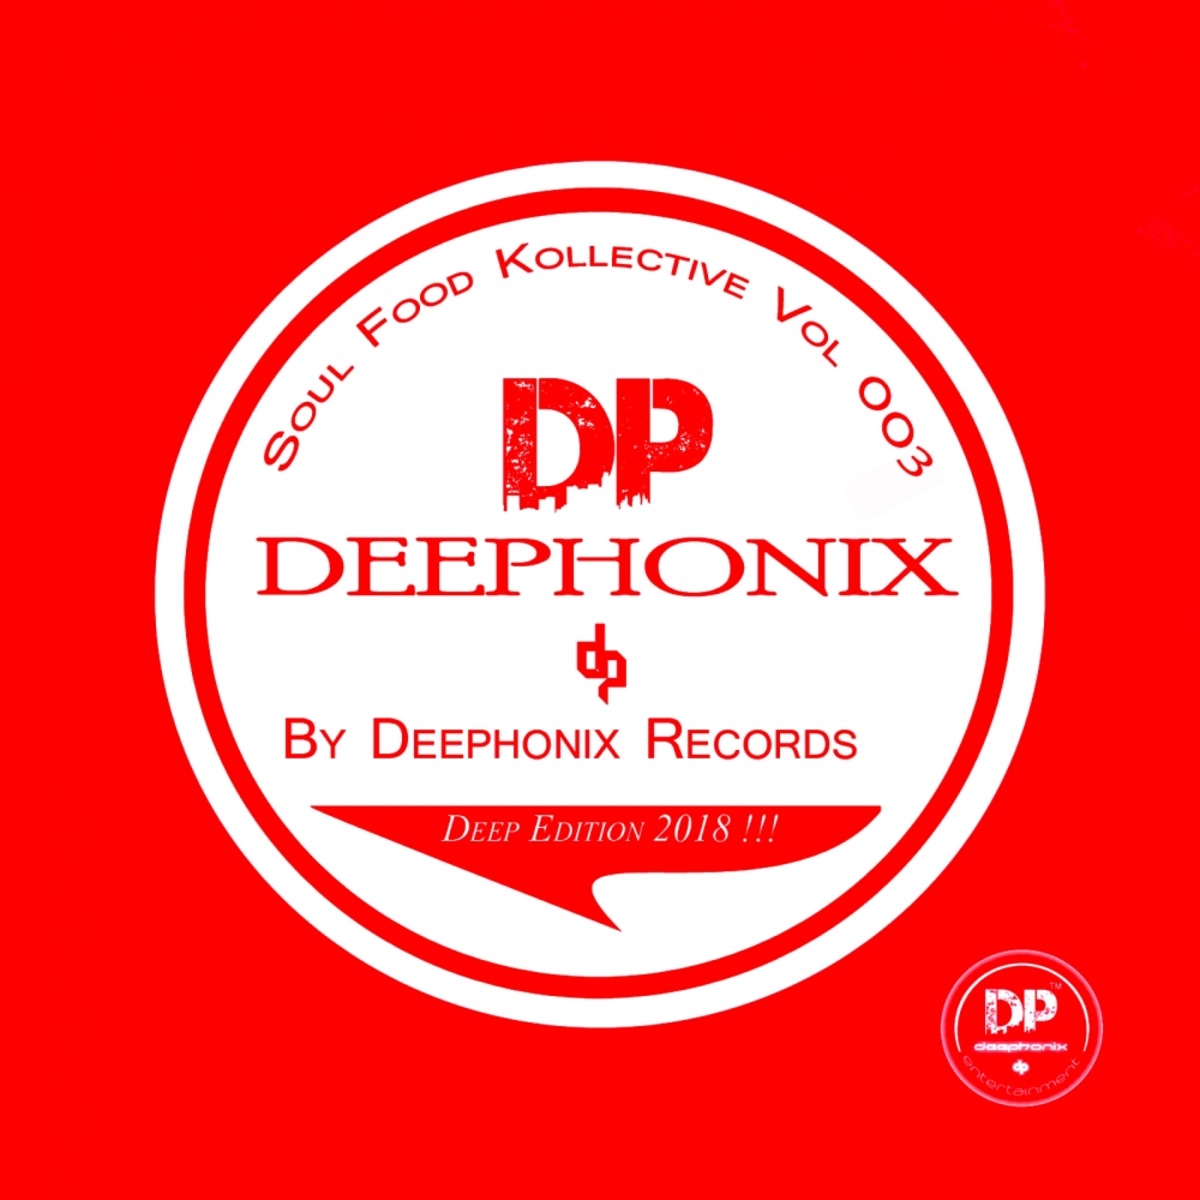 Deephonix Records - Soul Food Kollective Vol3 [Deep Edition] / Deephonix